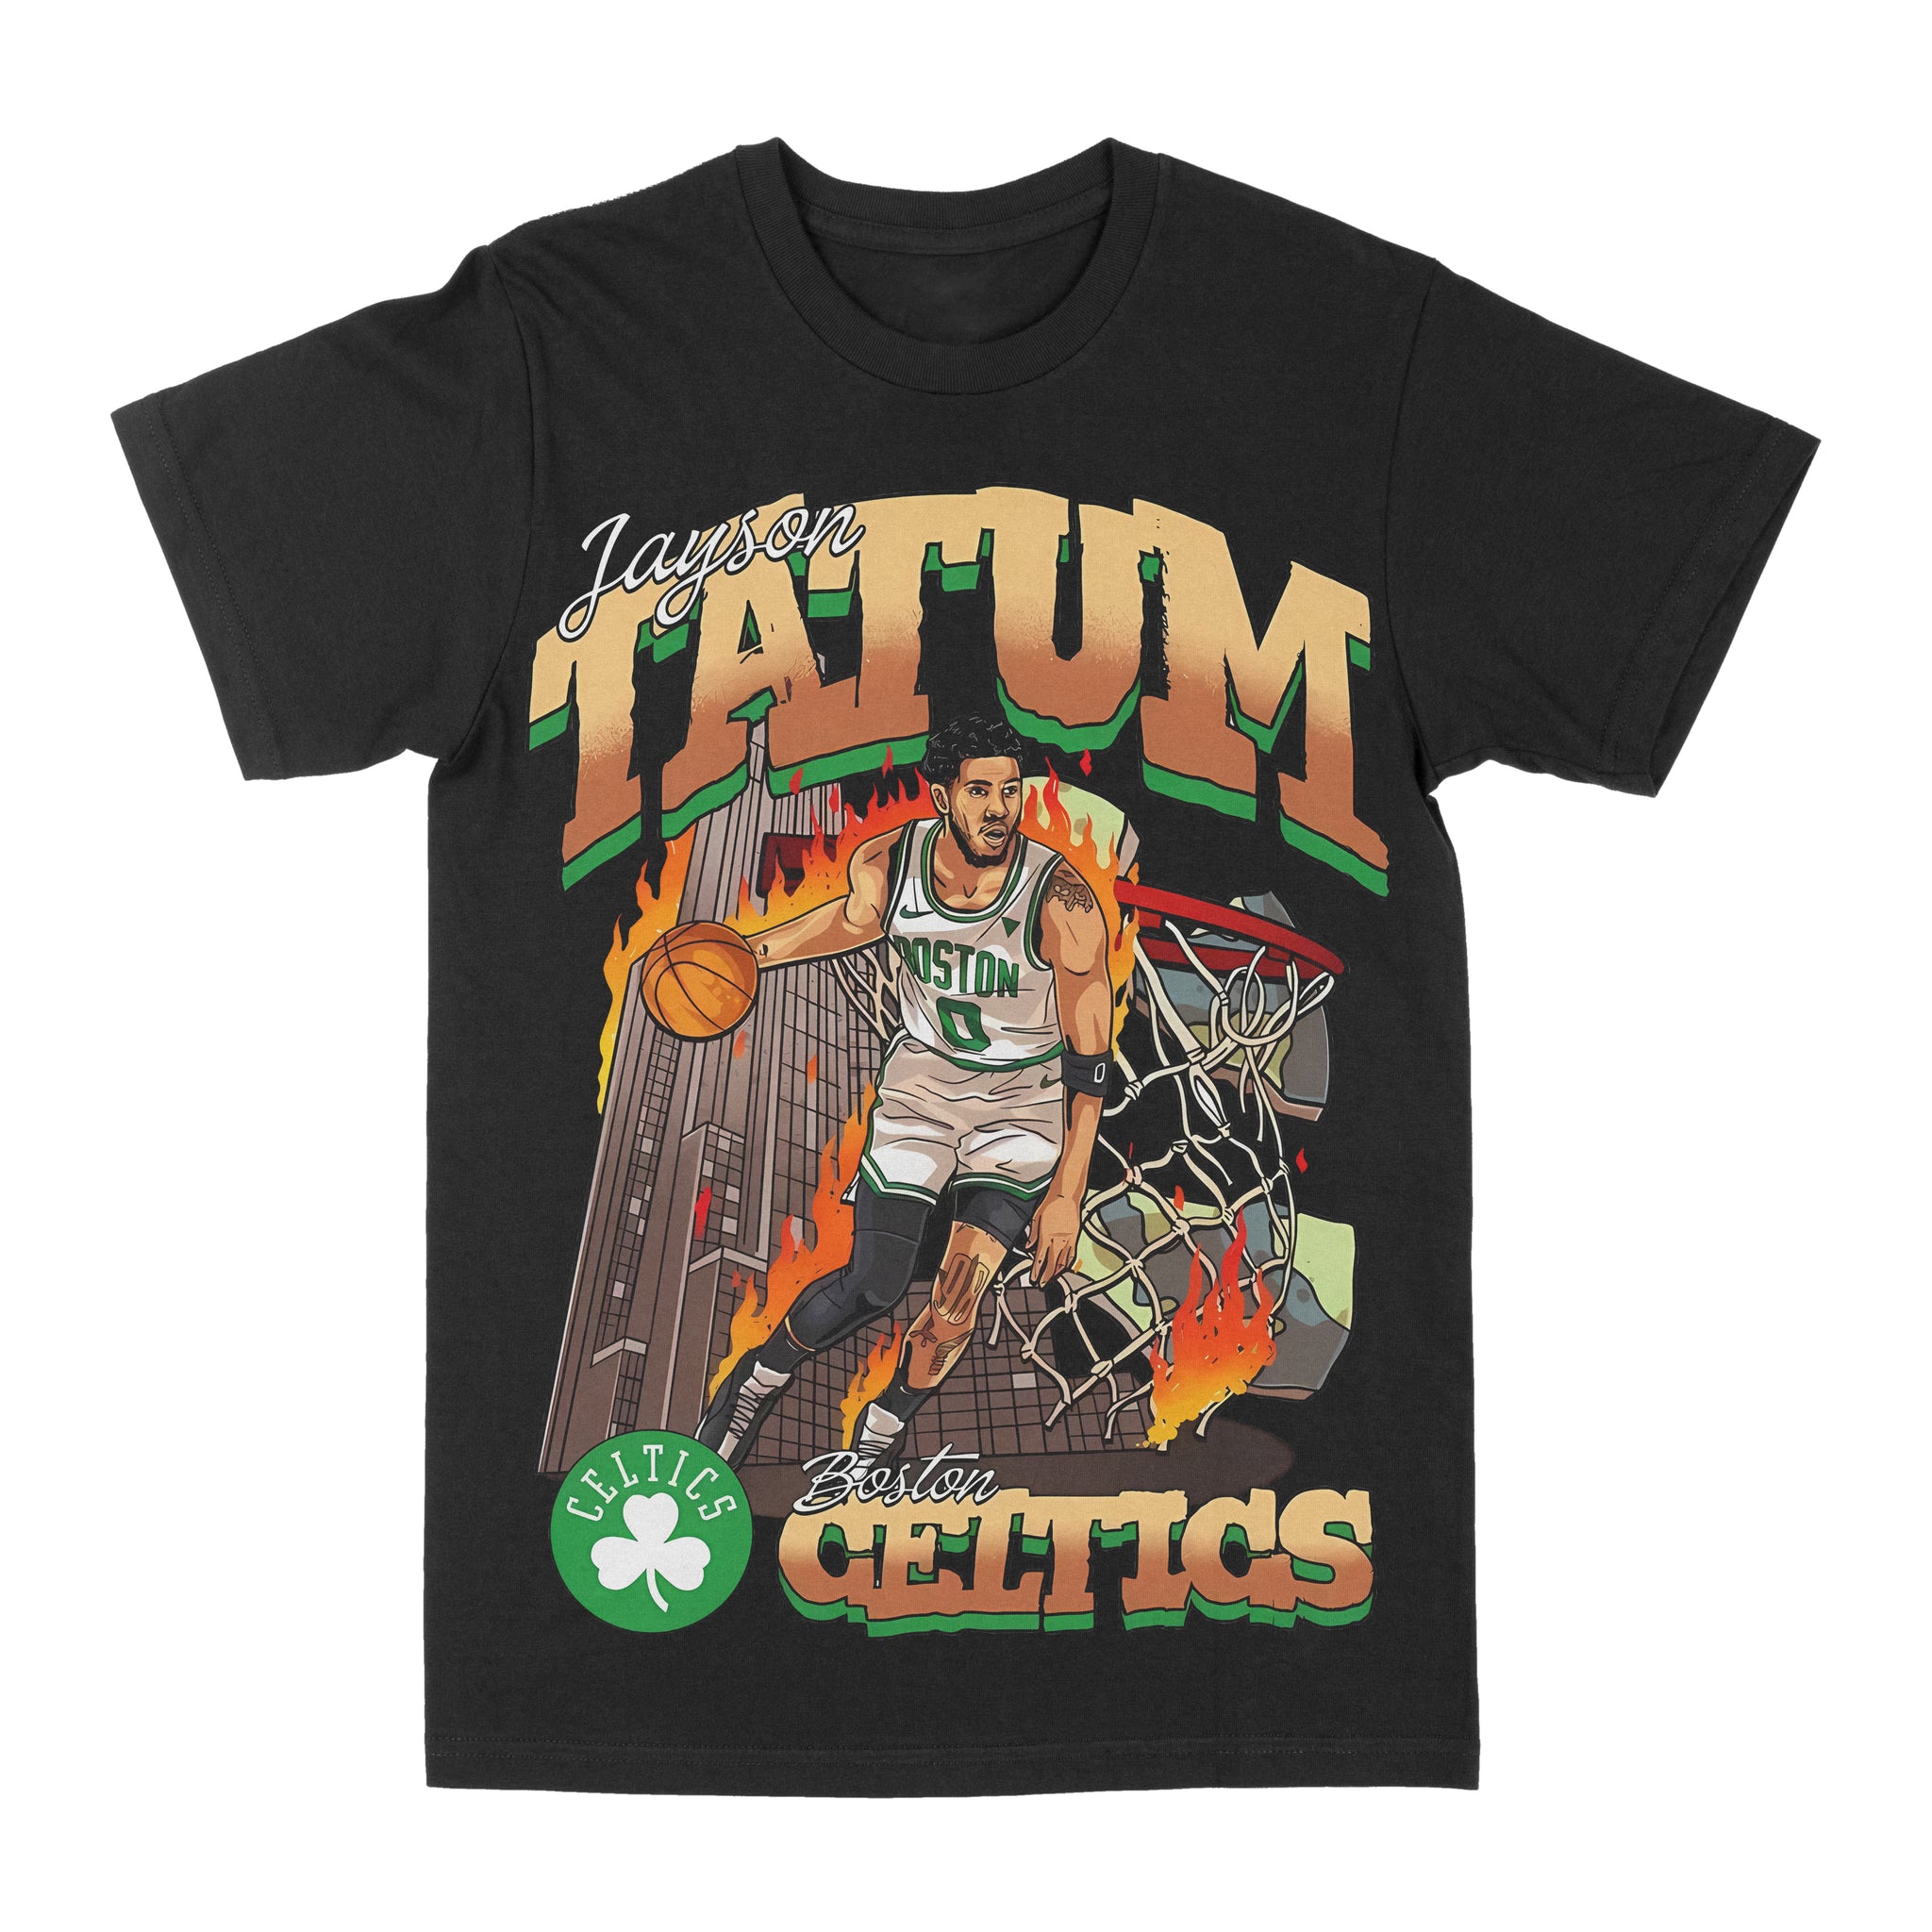 Jayson Tatum "Getting Buckets" Graphic Tee